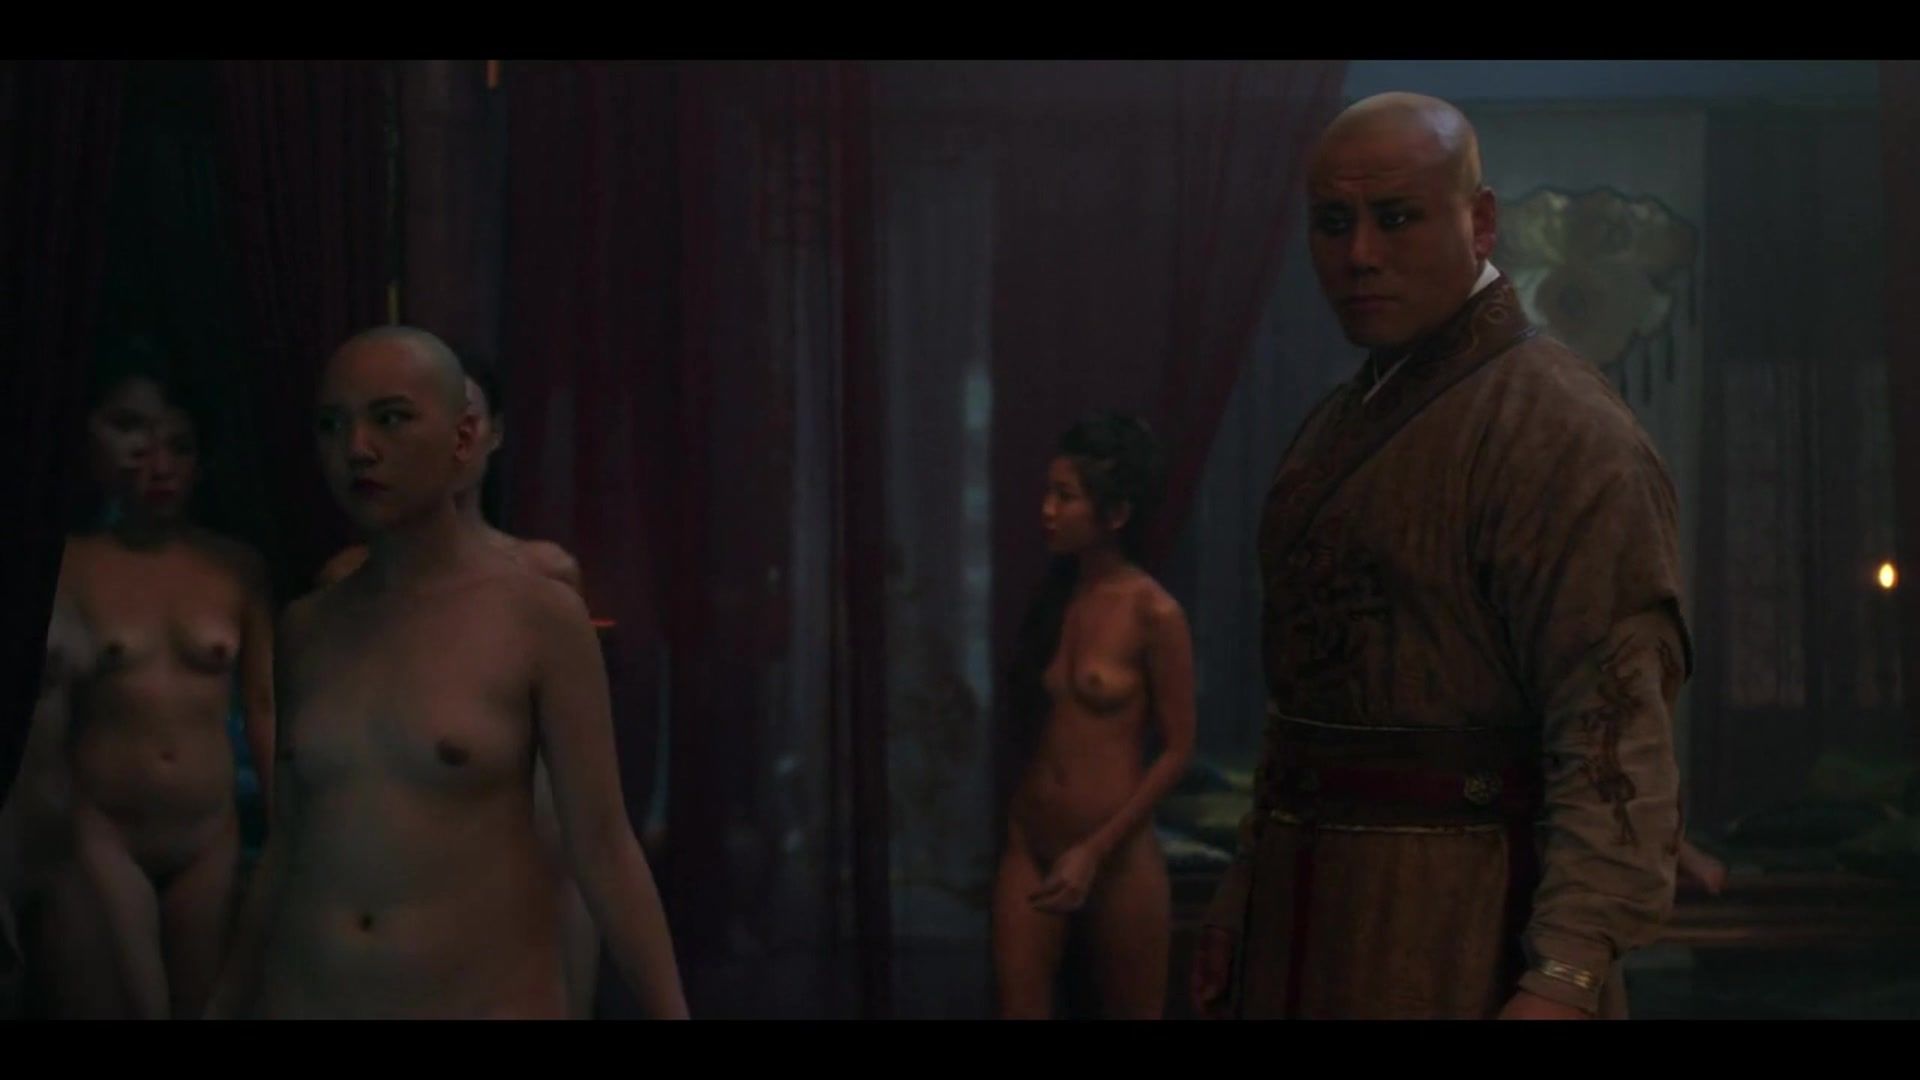 Hot Women Having Sex Sex video Joan Chen naked - Marko Polo - 3 - 2014 -2 Camdolls